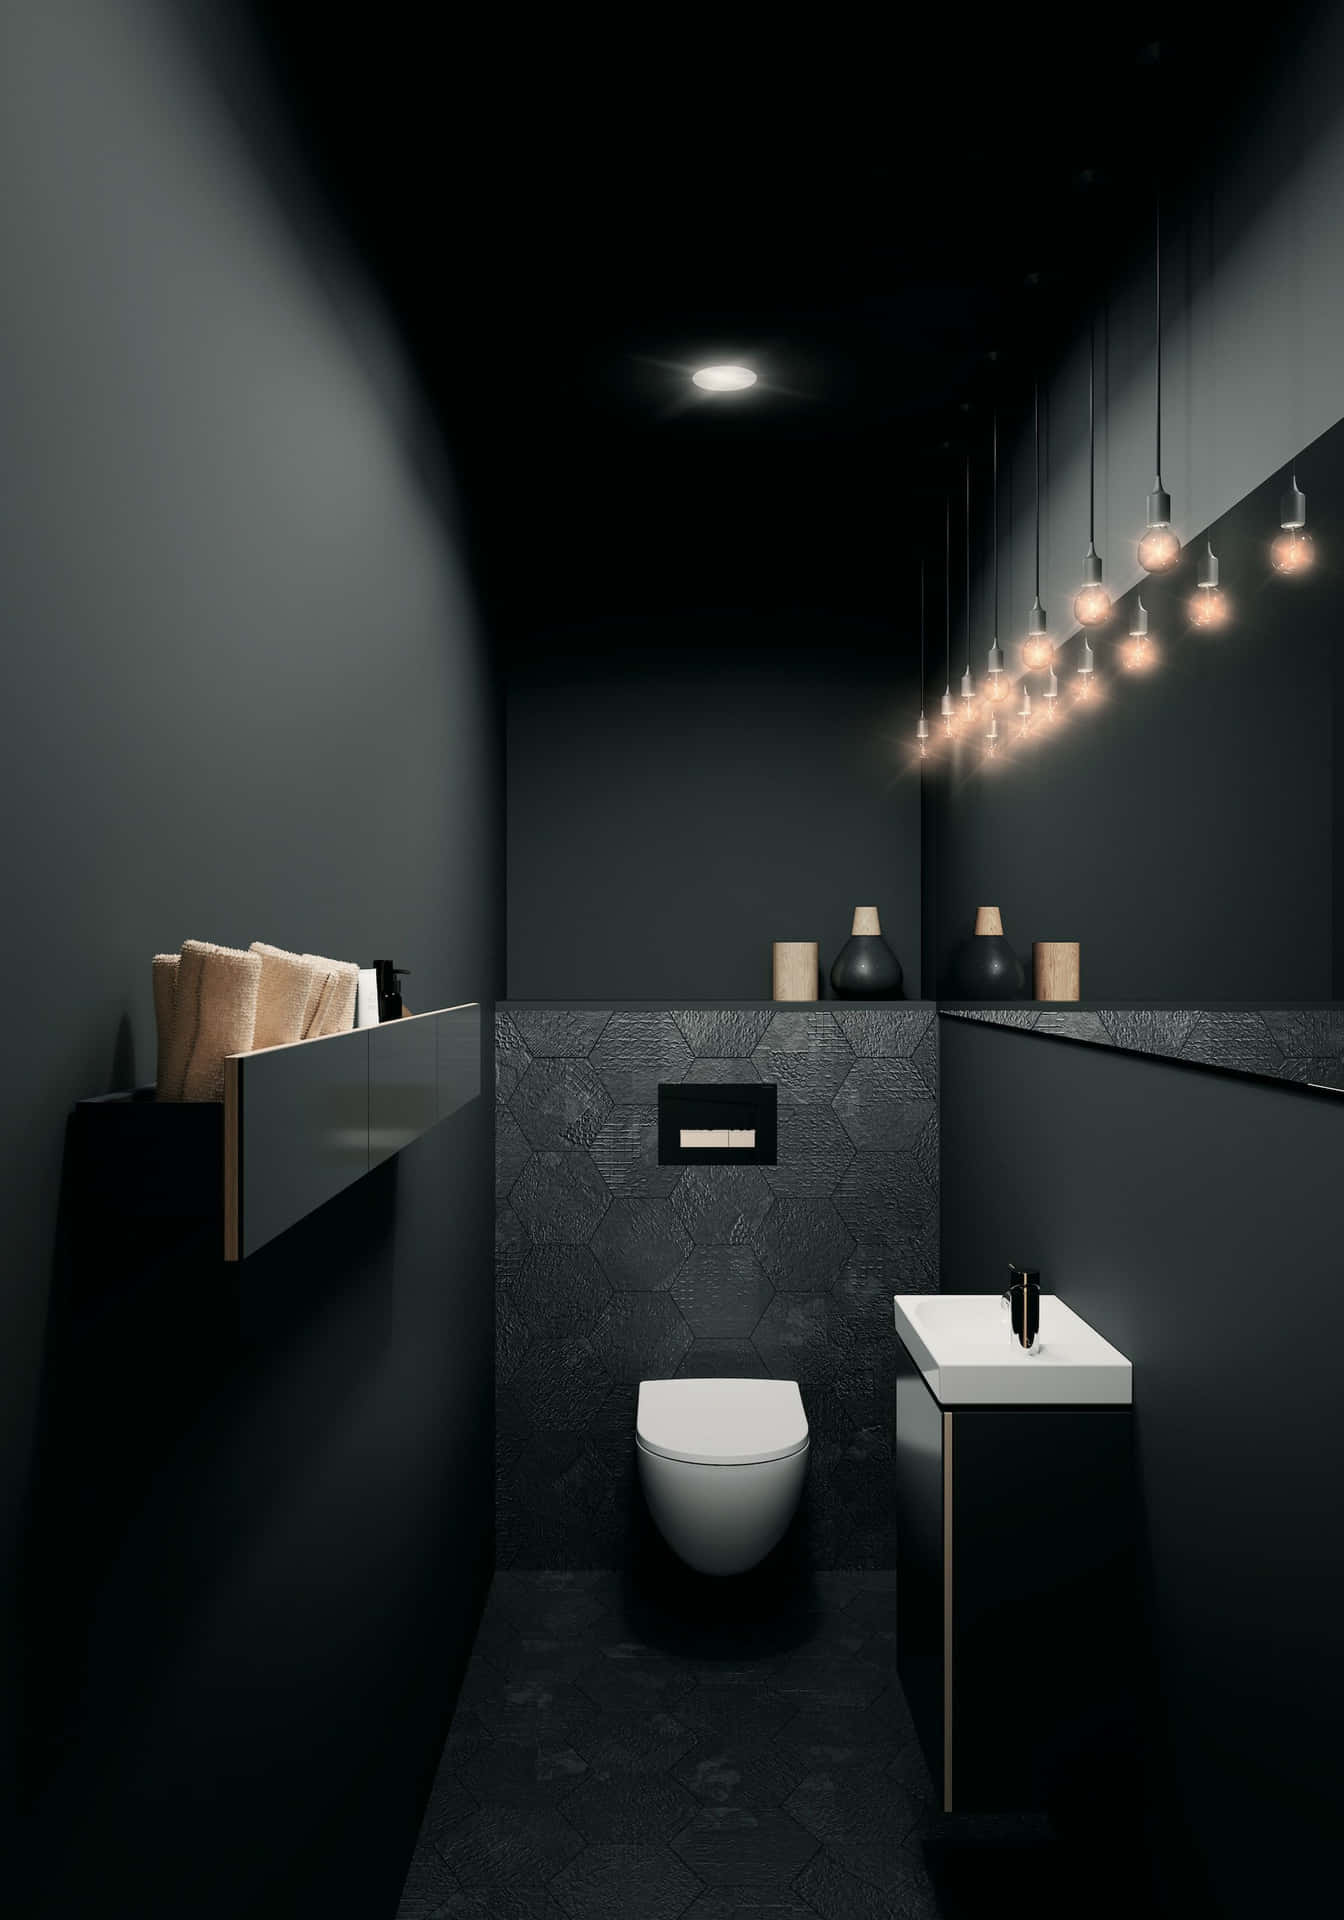 Modern and sleek toilet design in a luxurious bathroom